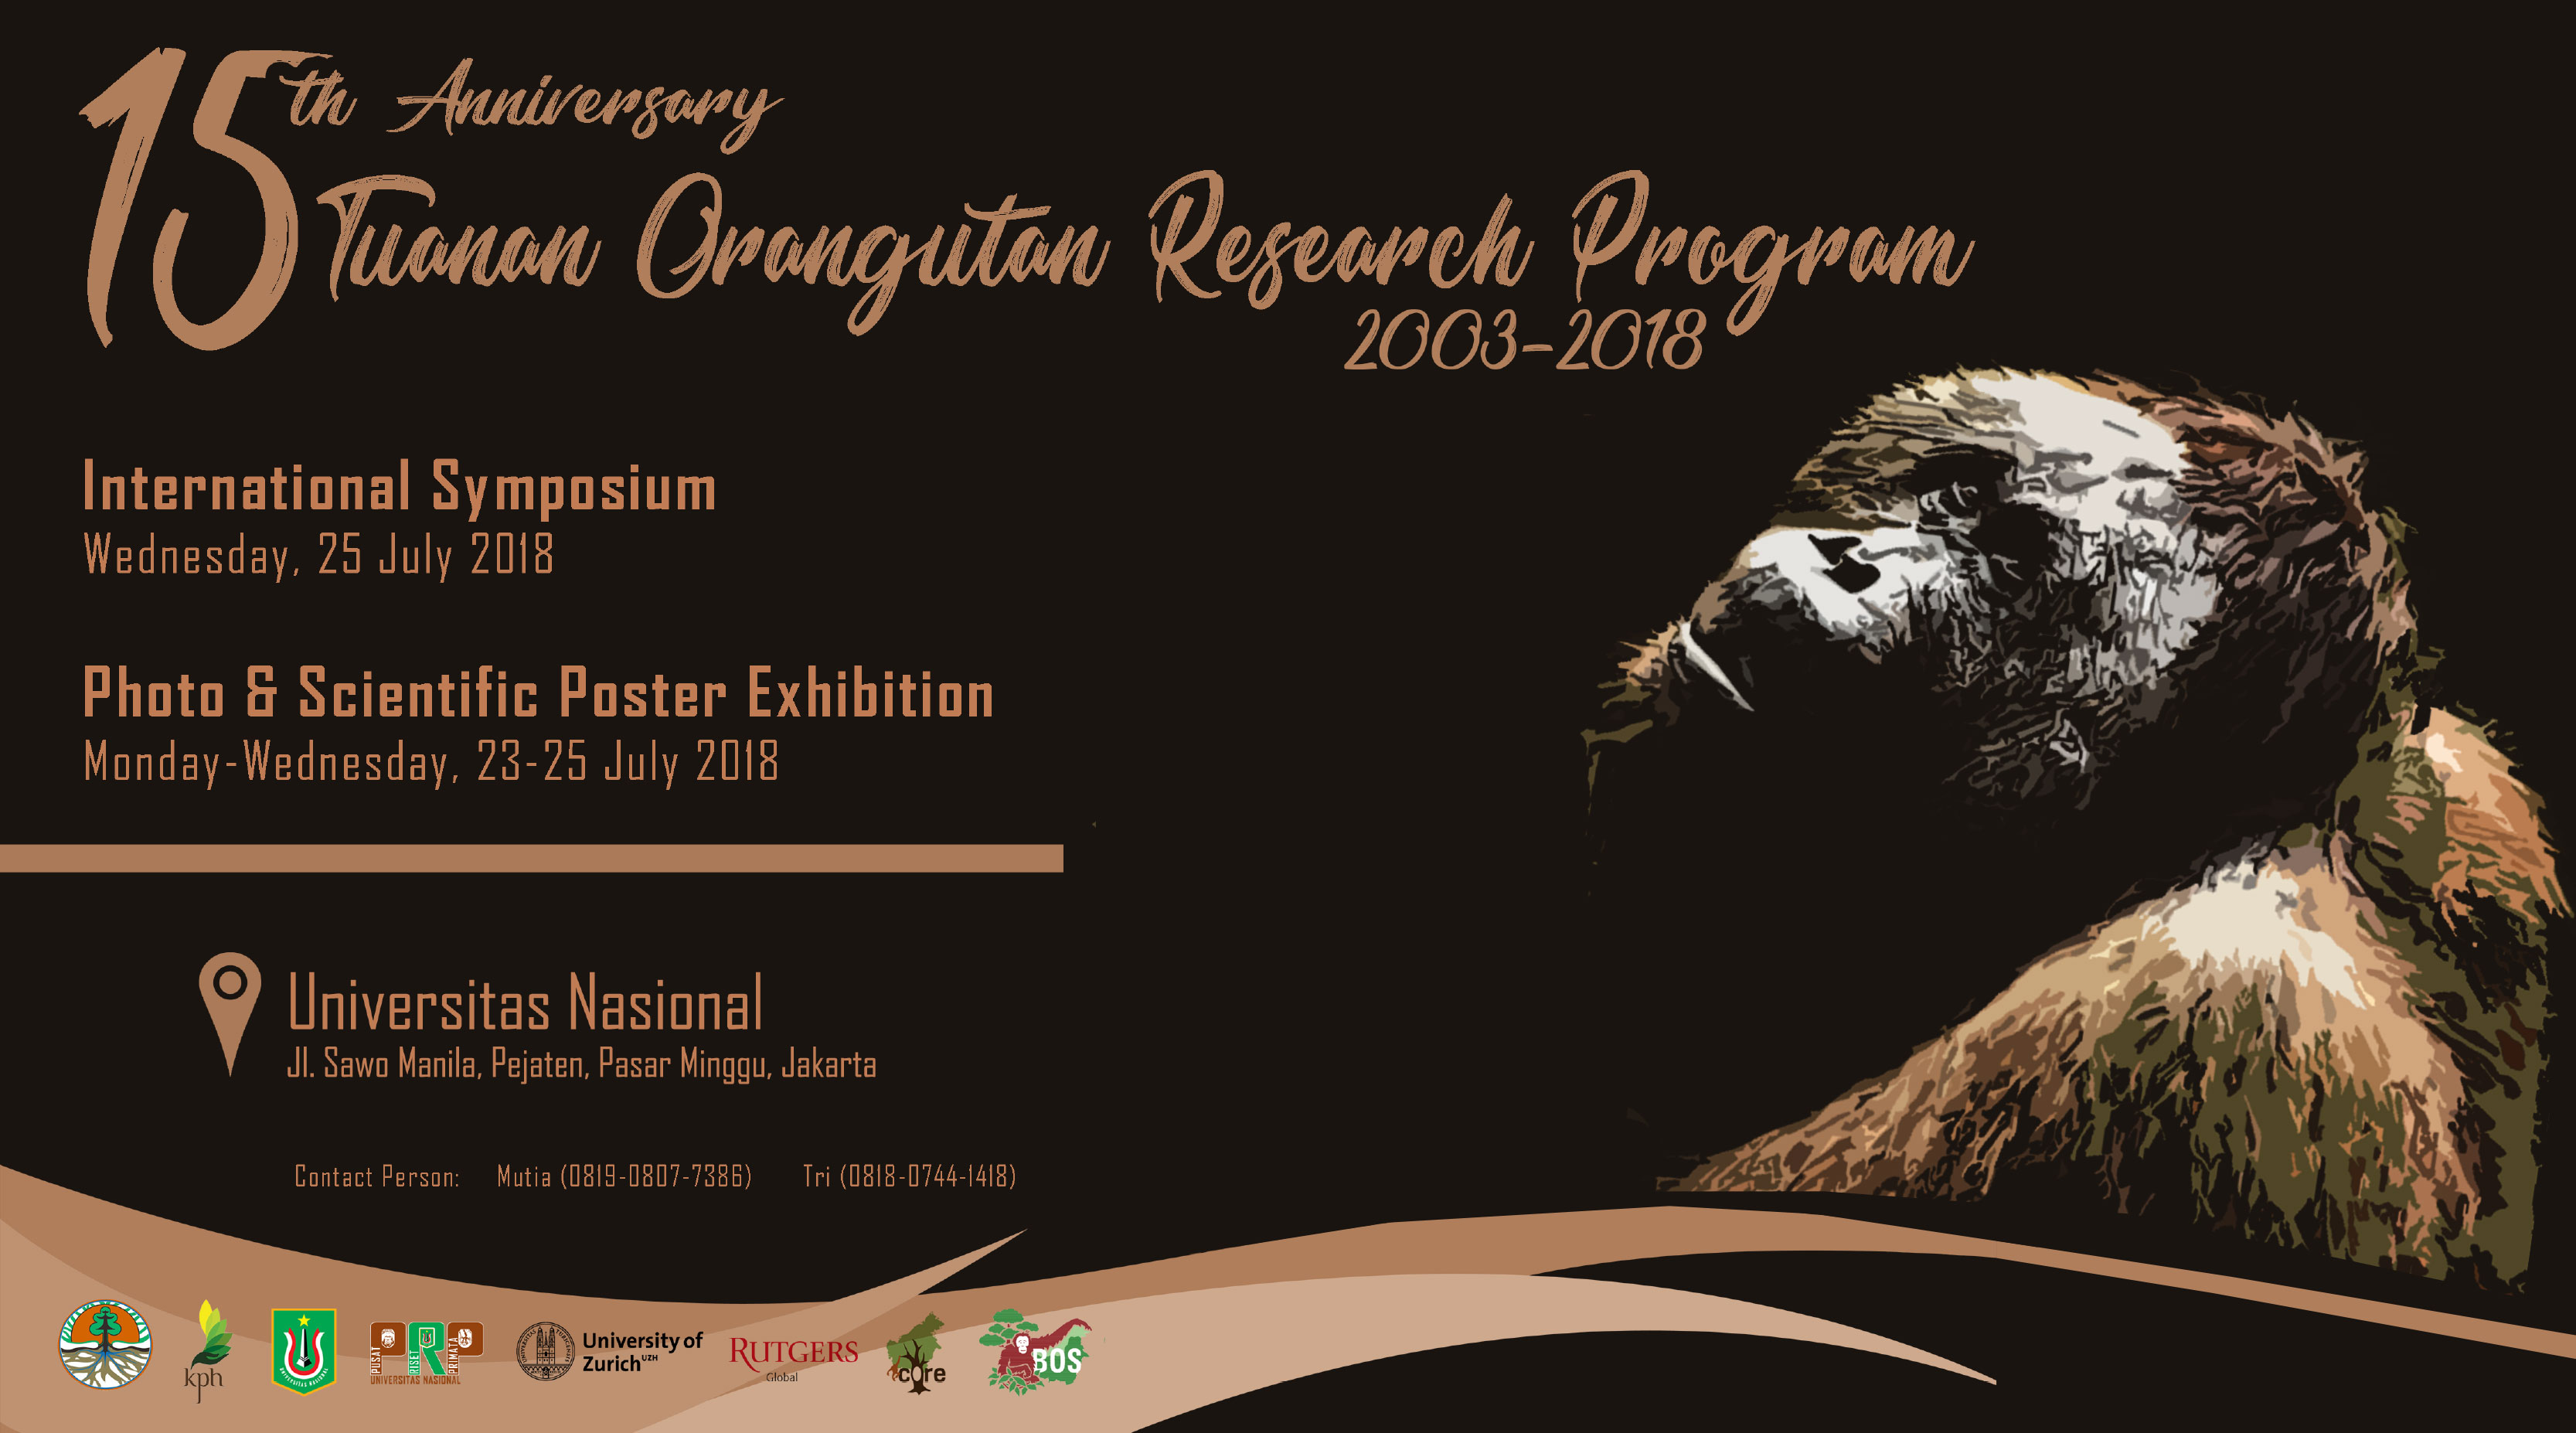 15 th Anniversary Tuanan Orangutan Research Program 2003-2018